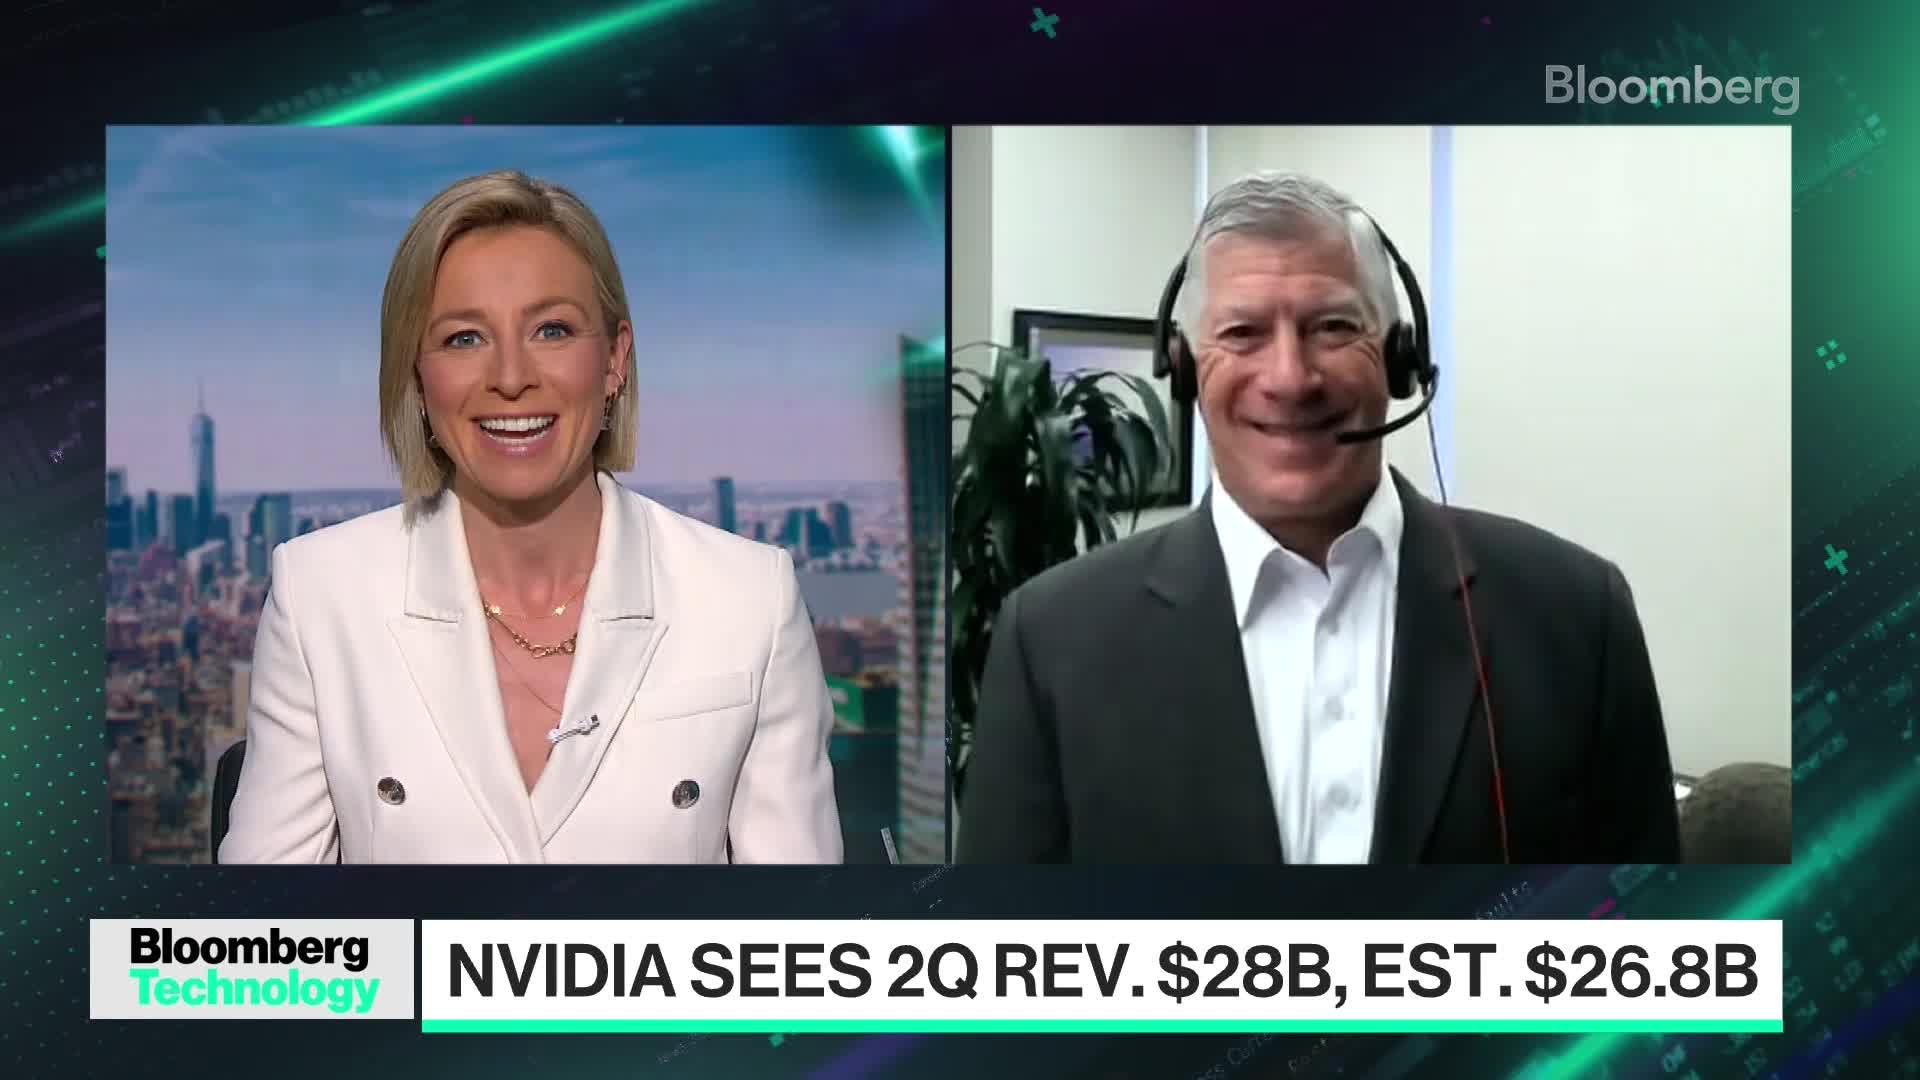 Nvidiaが急騰、売上高予測がAIの期待に応える